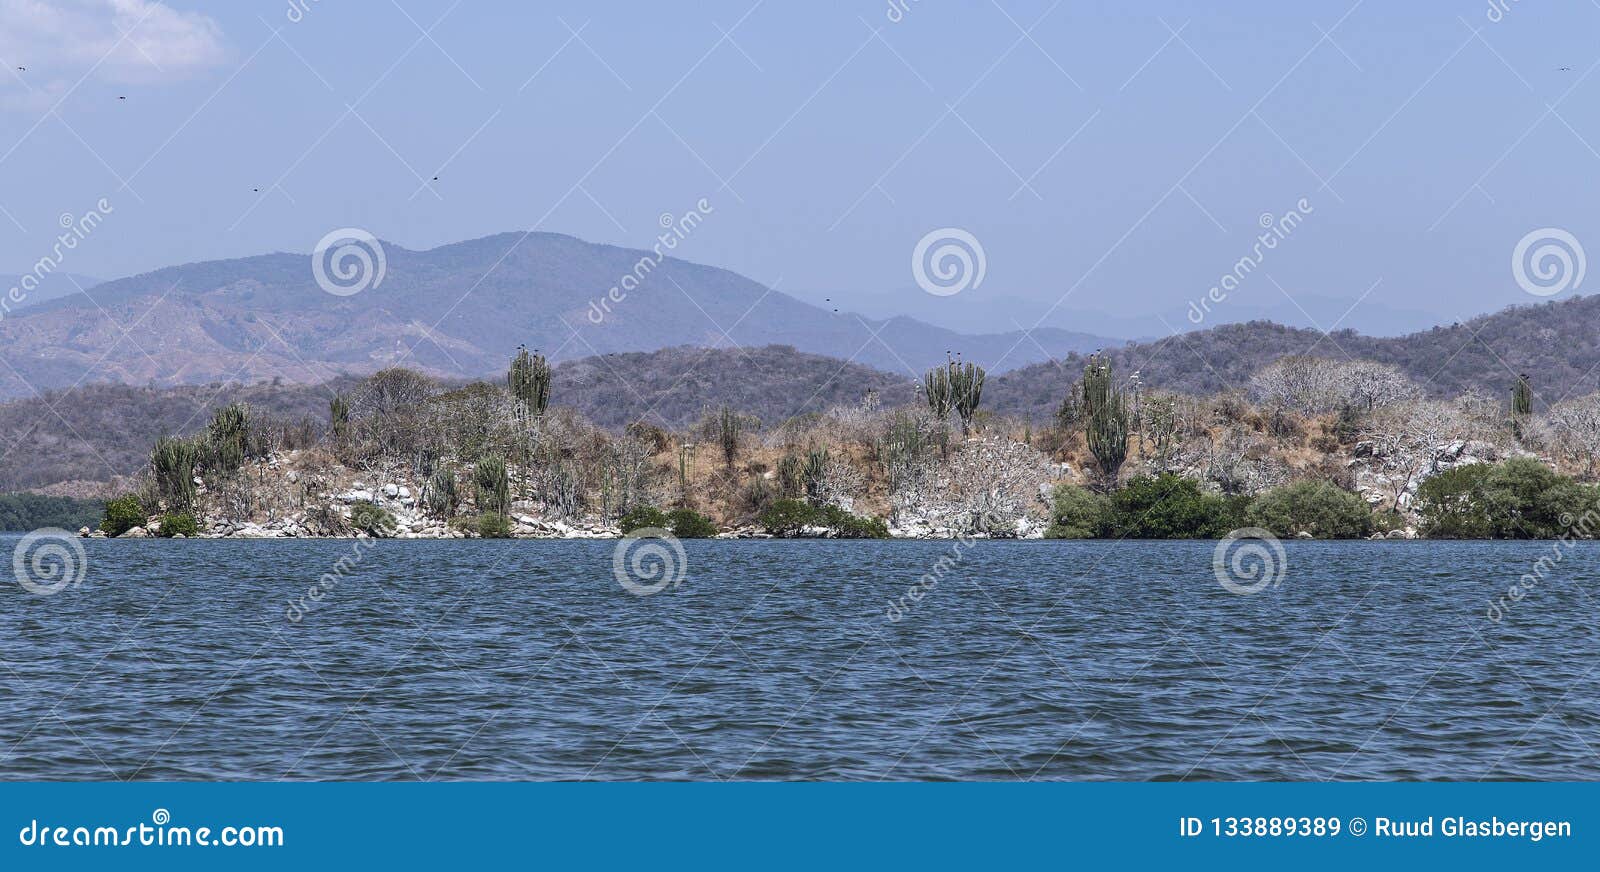 chacahua lagoon in oaxaca, mexico